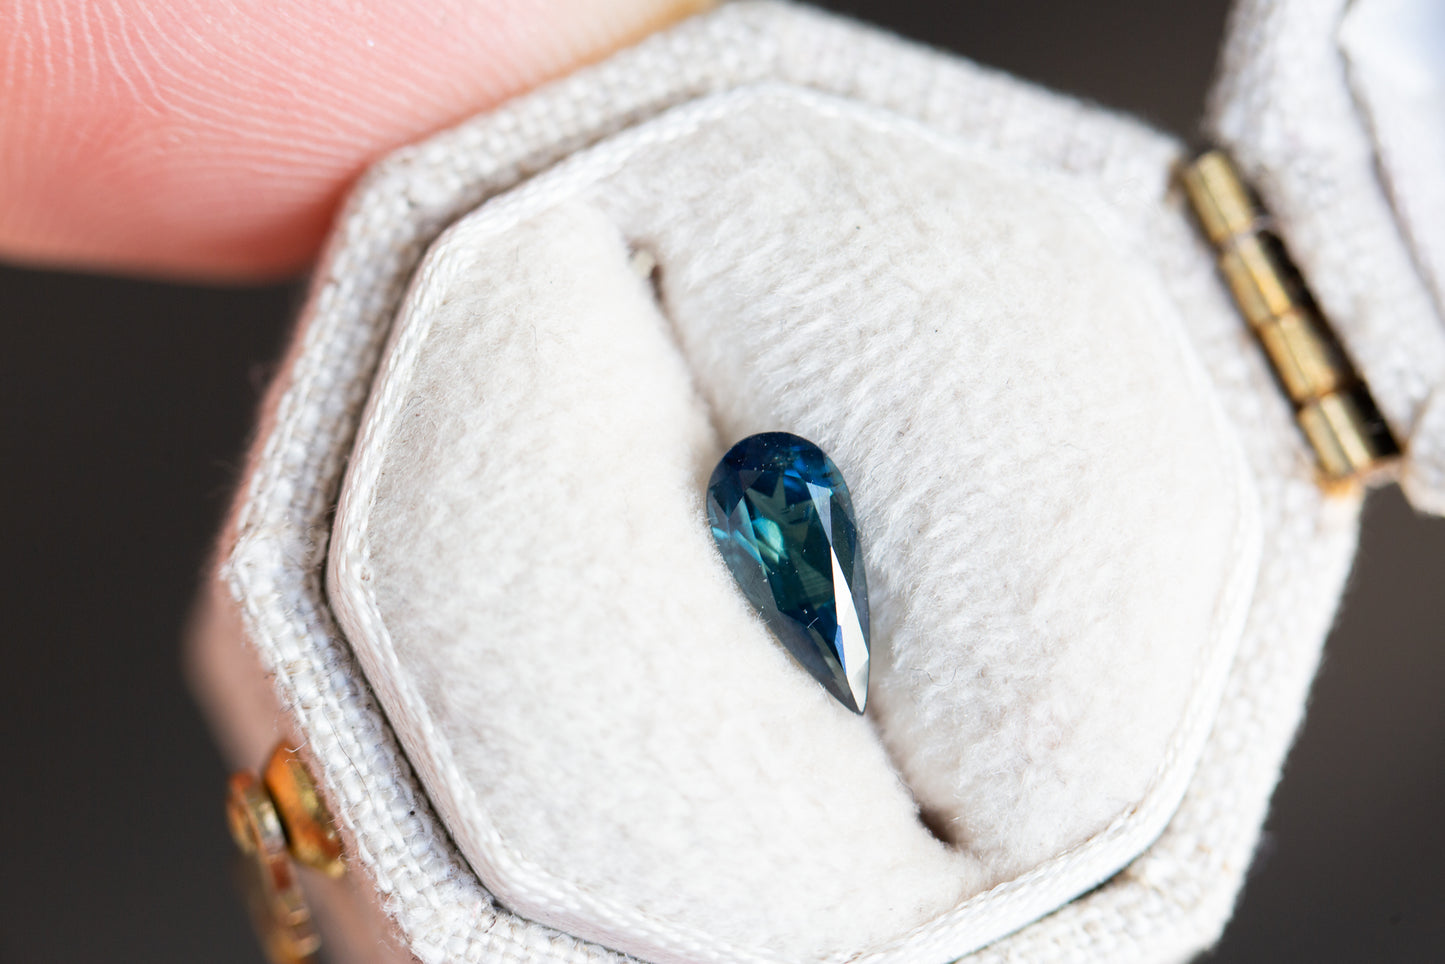 .67ct elongated pear dark blue green sapphire